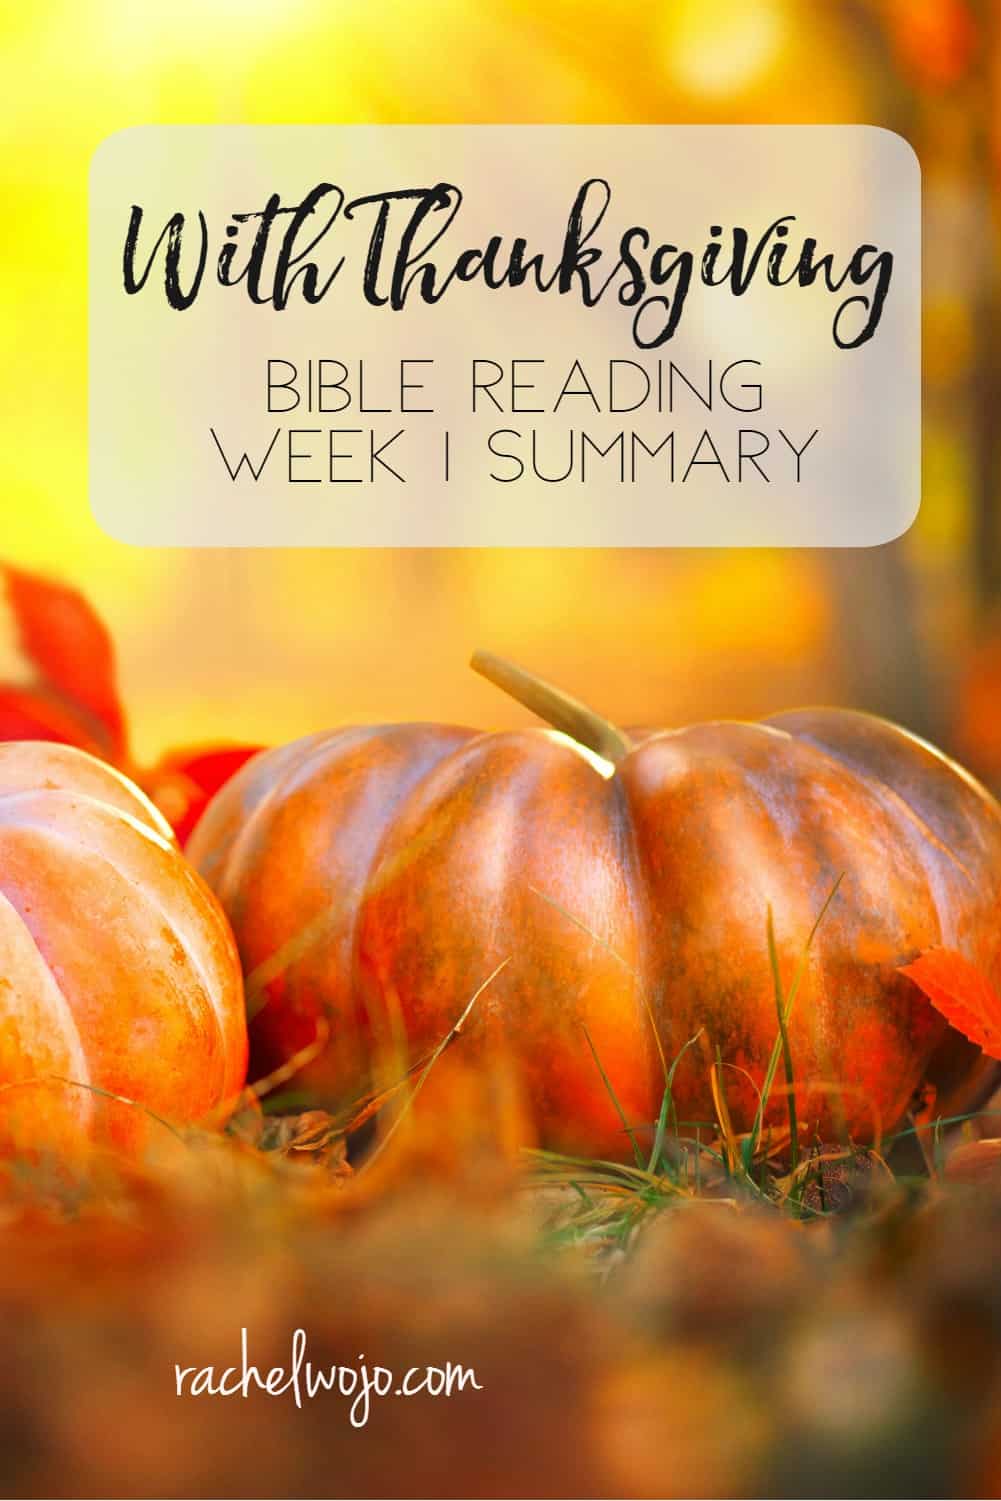 with-thanksgiving-bible-reading-summary-week-2-rachelwojo